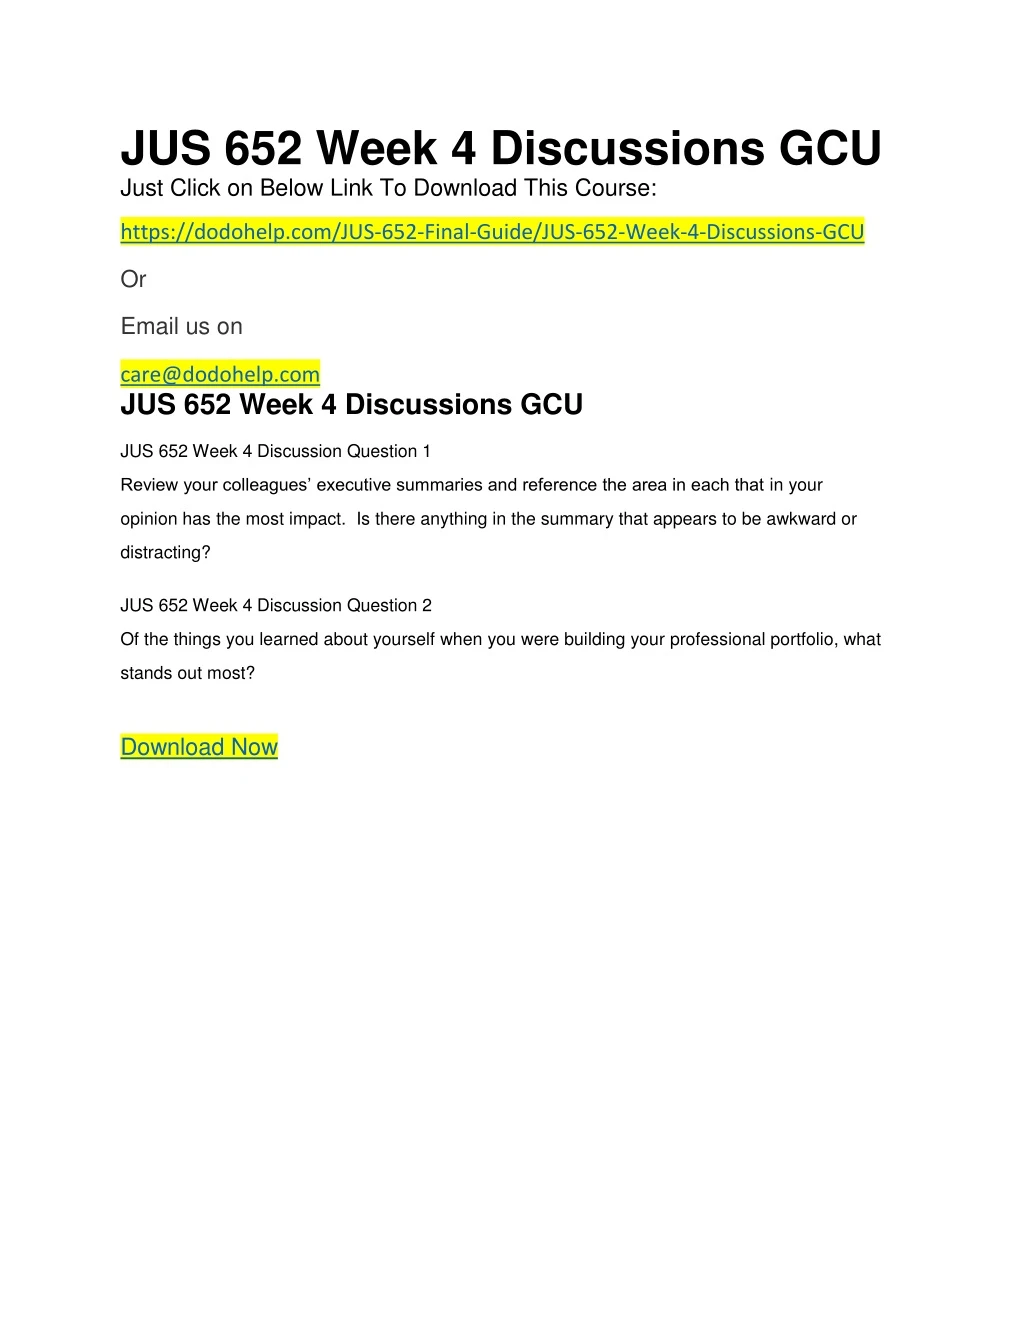 jus 652 week 4 discussions gcu just click